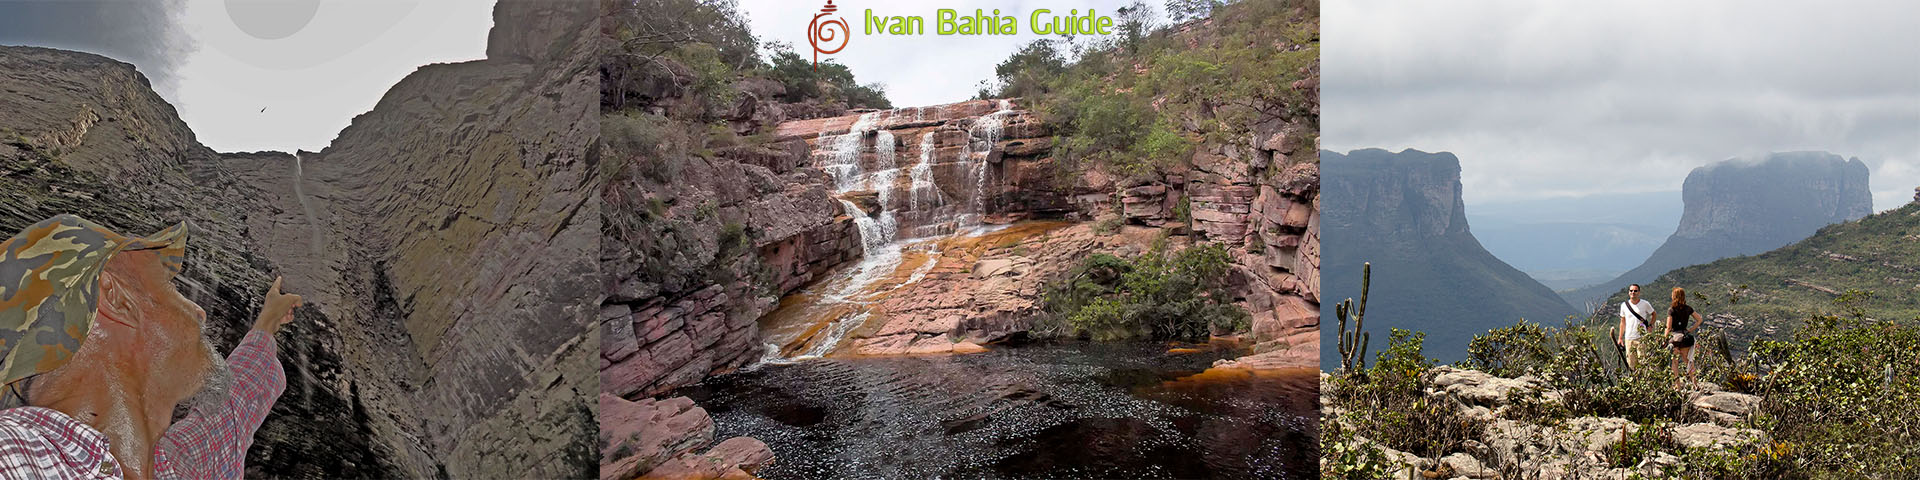 Ivan Bahia tour-guide / hiking in Chapada Diamantina National Park (aka 'the Brazilian Grand Canyon') mountain views,